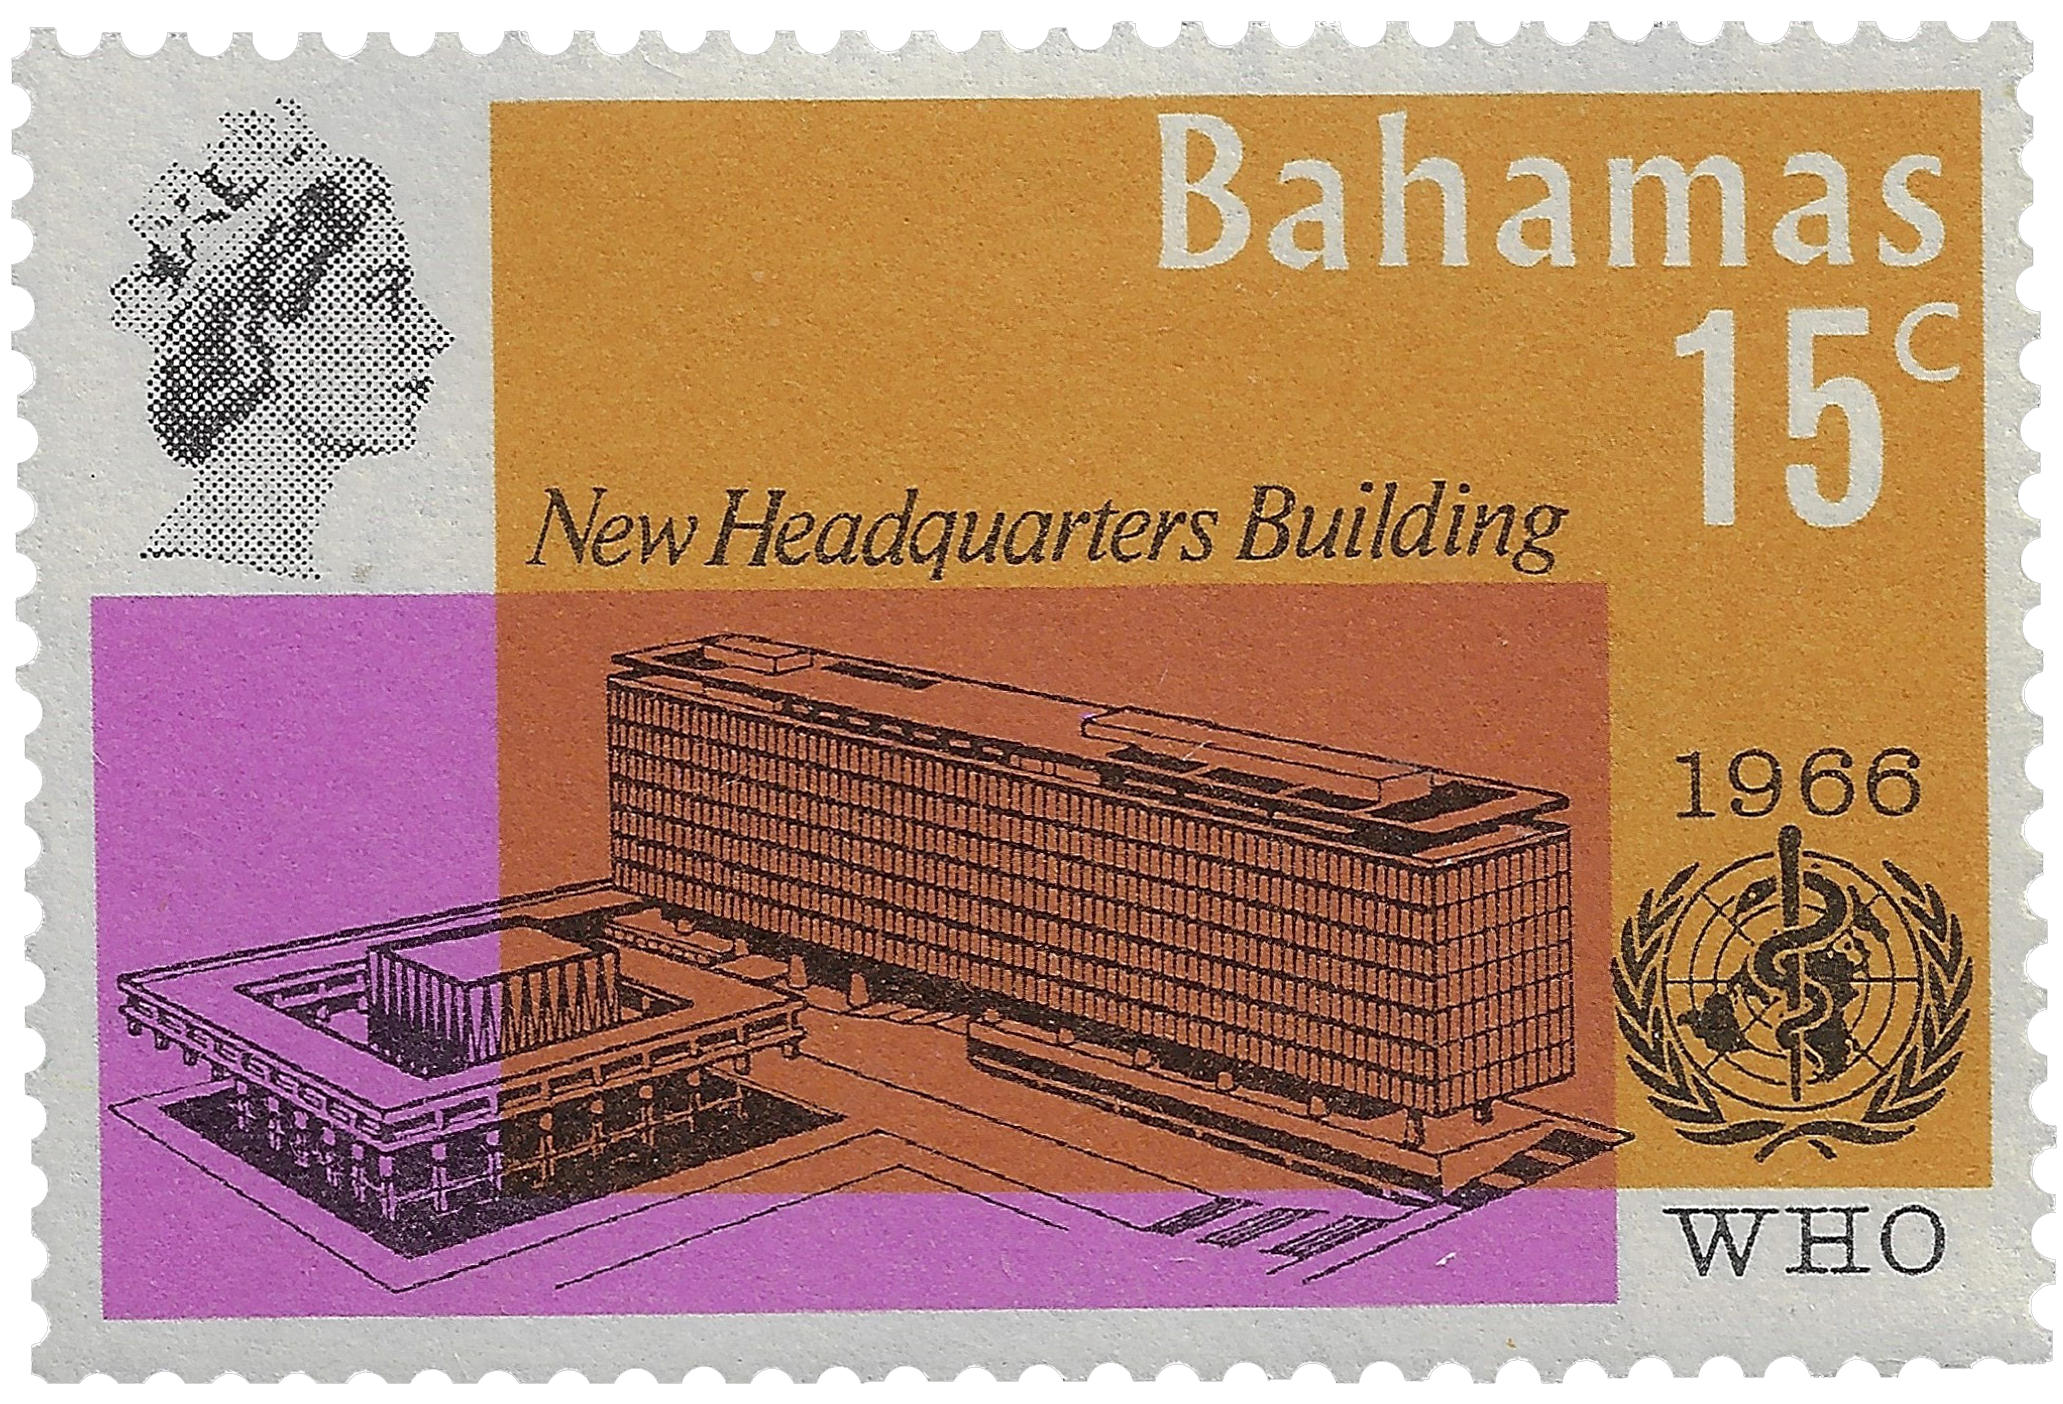 15c 1966, New Headquarters Building, WHO